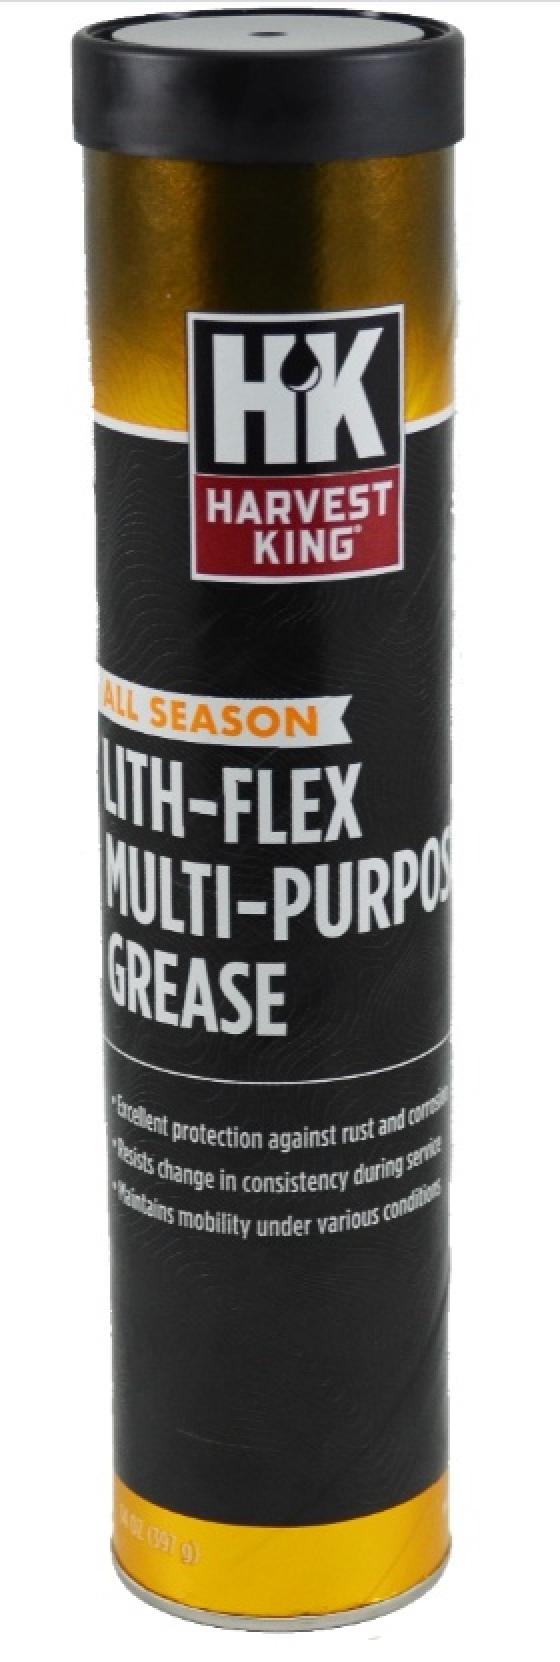 Harvest King All Season Lith-Flex Multi-Purpose Grease